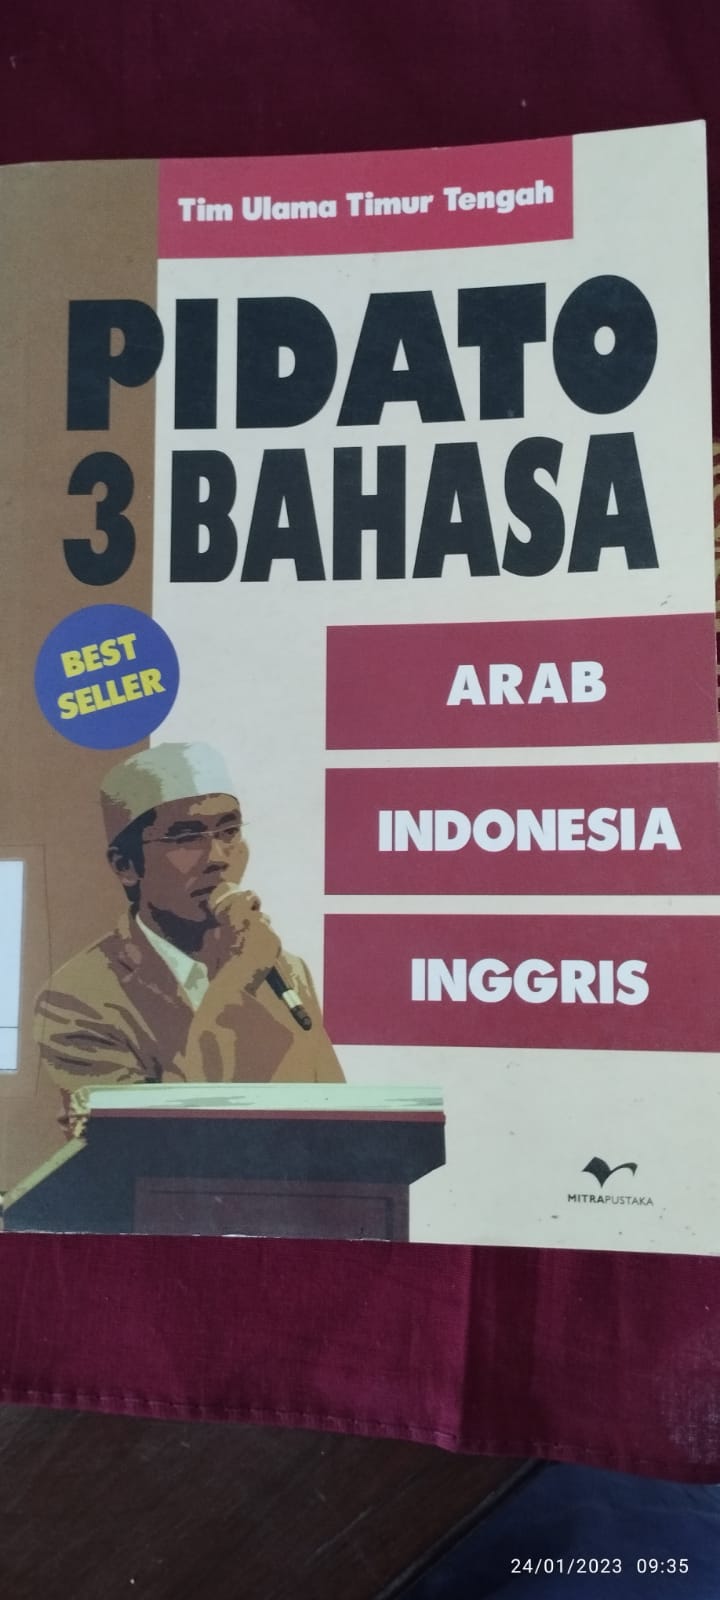 Pidato 3 Bahasa: Arab, Indonesia, Inggris